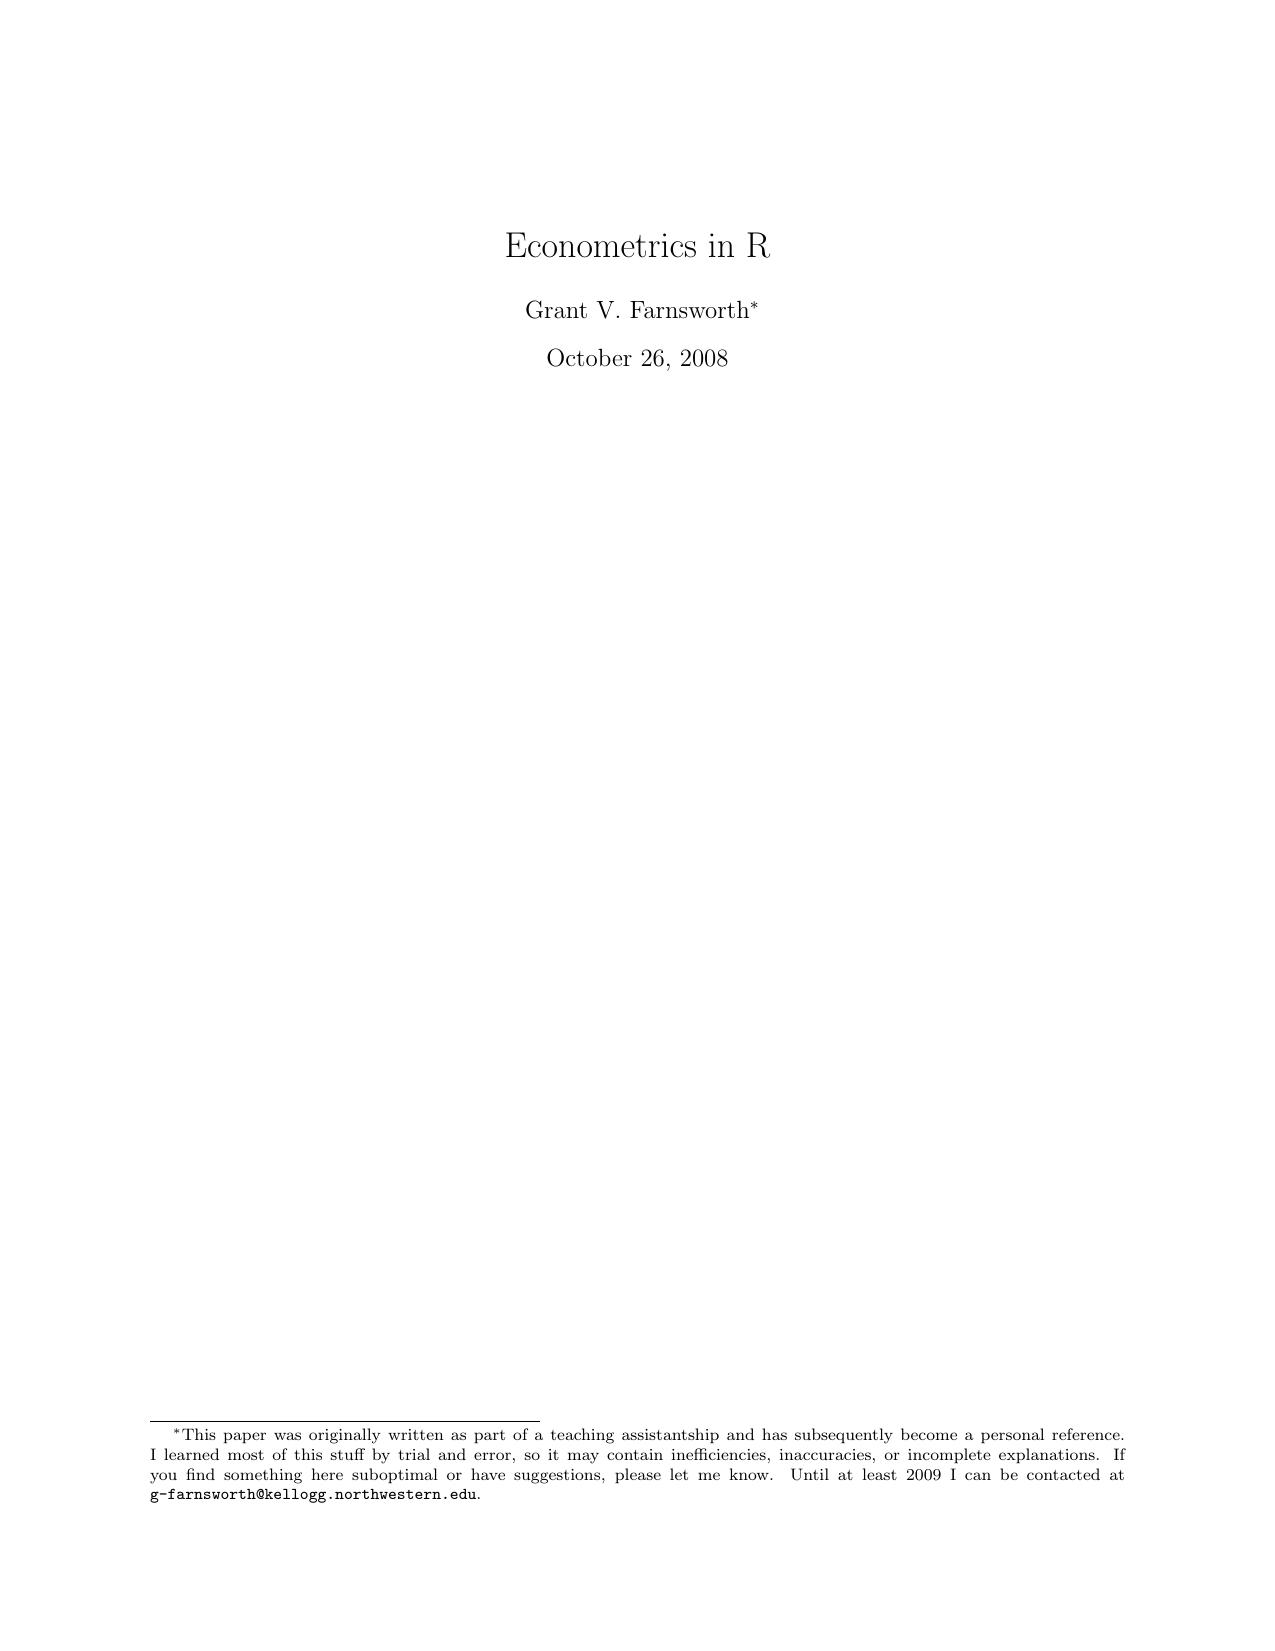 Econometrics in R by Farnsworth